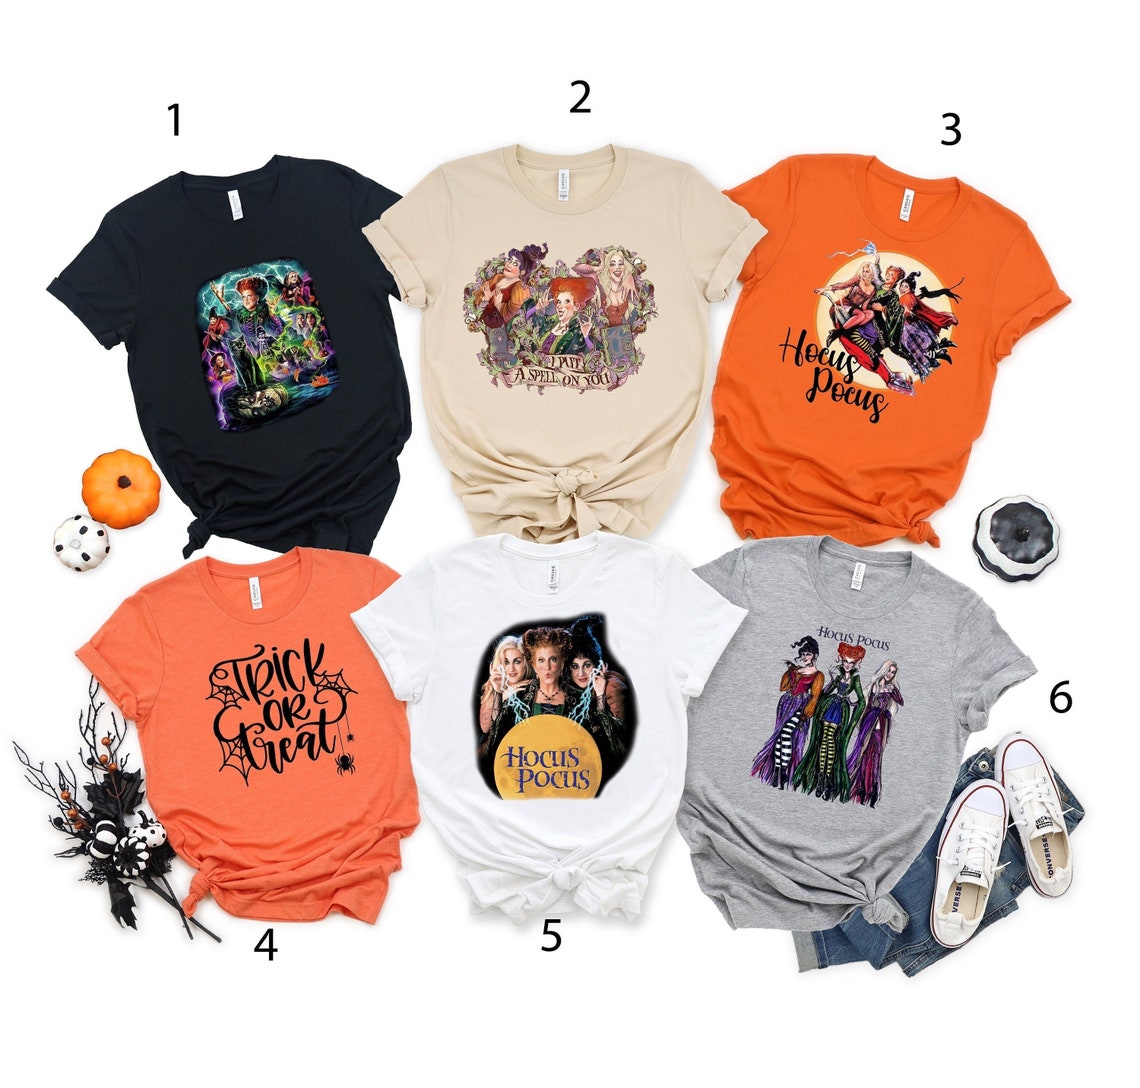 Hocus Pocus Shirt, Sanderson Sisters Shirt, Halloween Vintage Shirt, Disney Halloween Shirt, Halloween Shirts, Halloween Party Shirt, Witch